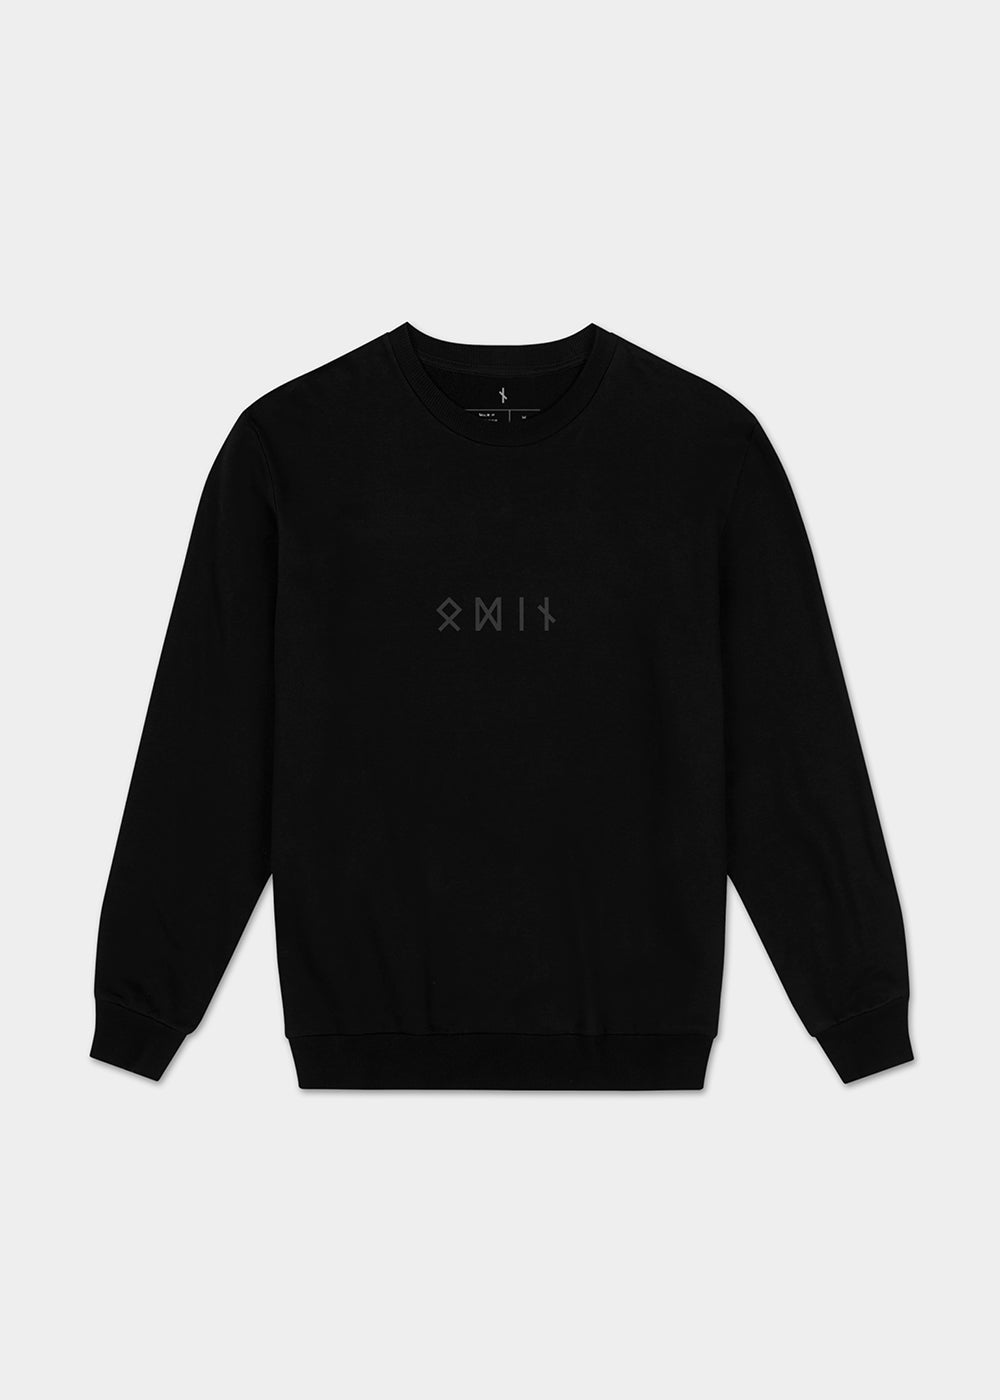 Sleek black Odin sweatshirt with Scandinavian design. The All-Father sweatshirt. Praise Odin.